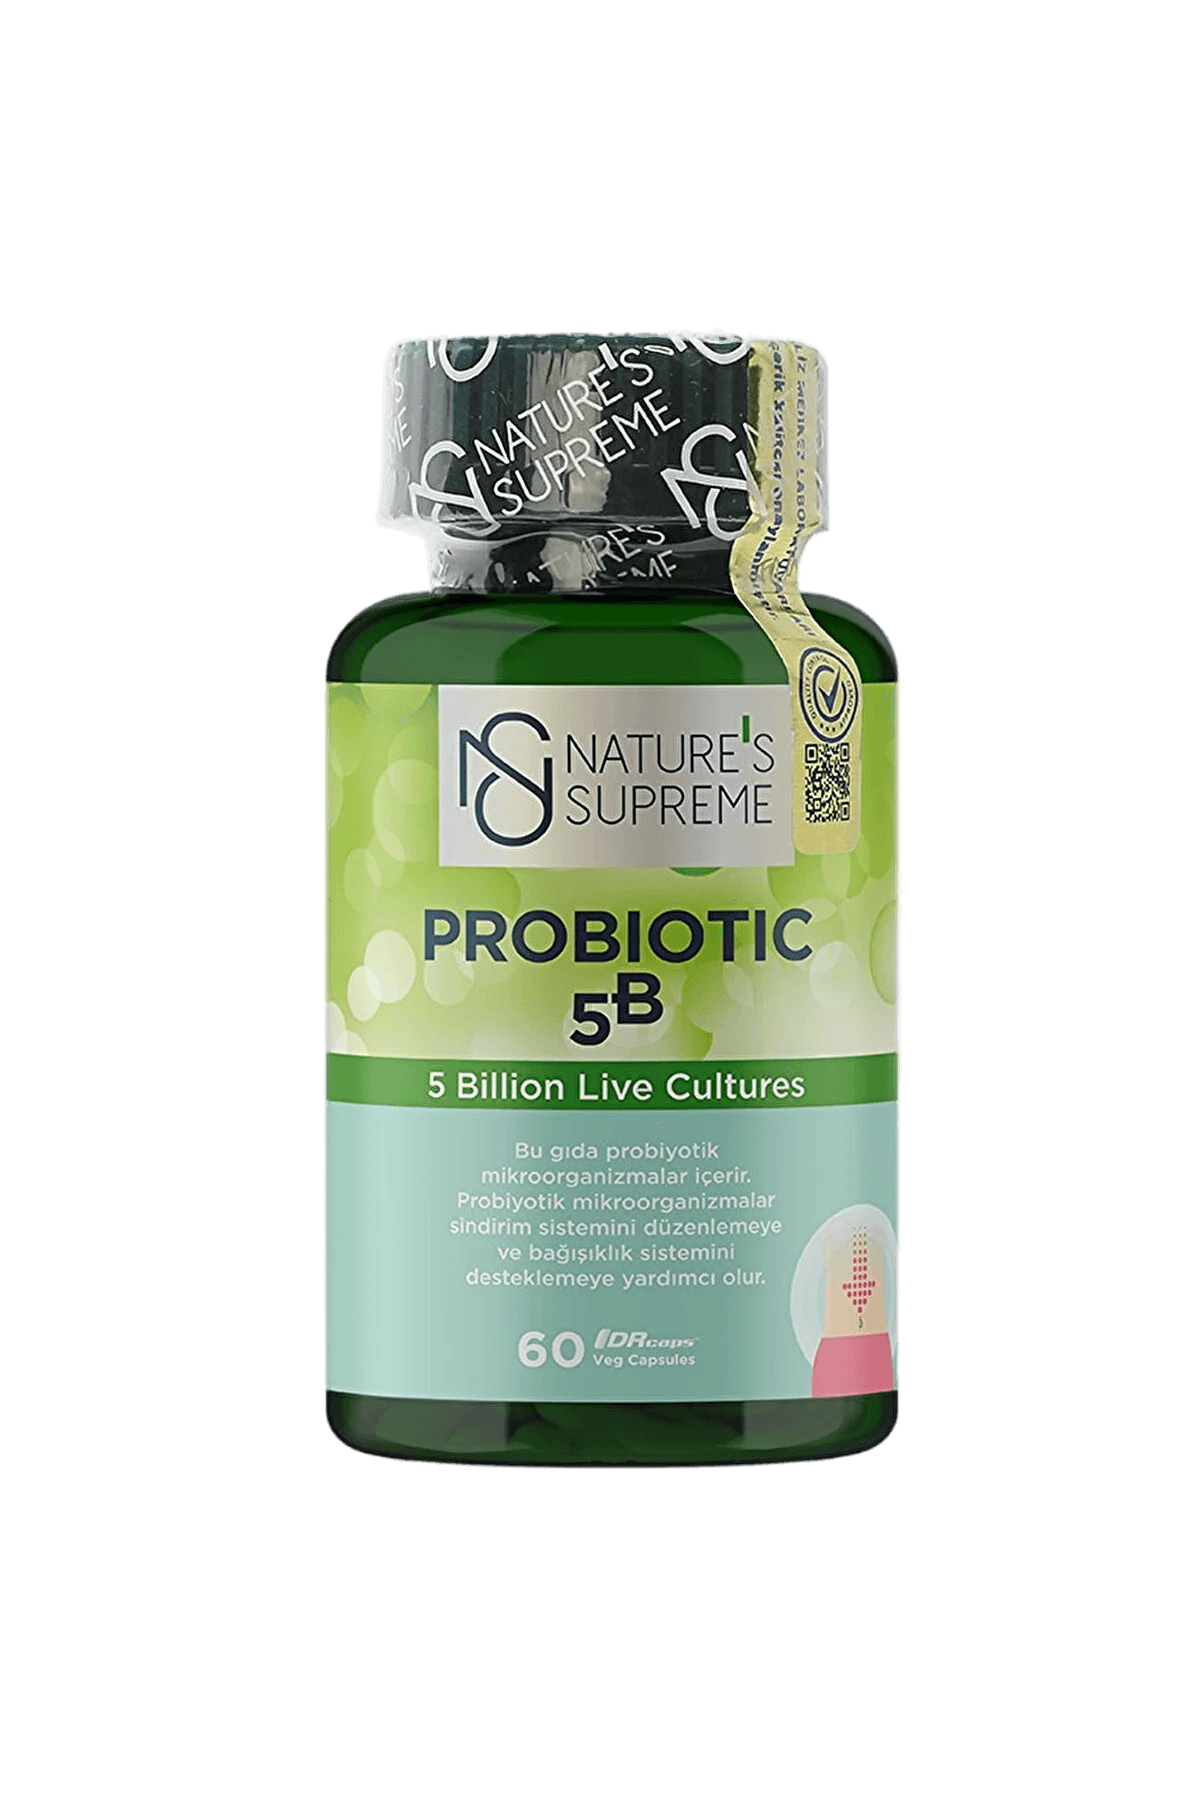 Probiotics Tablets - The Supplements Factory